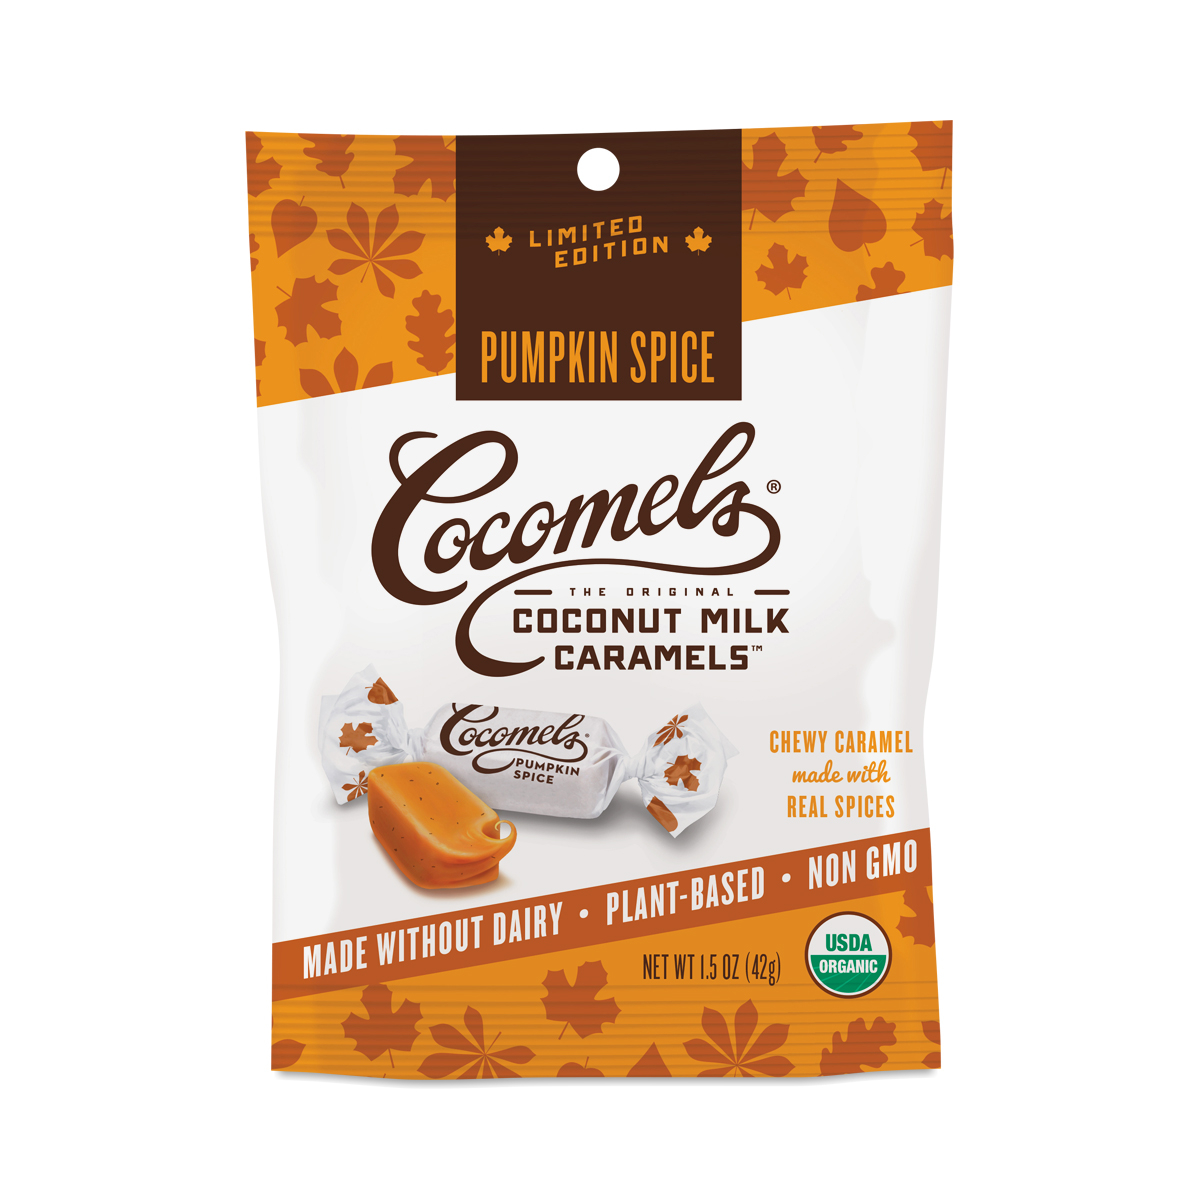 2-Pack Cocomels Coconut Milk Caramels, Pumpkin Spice 1.5 oz bag